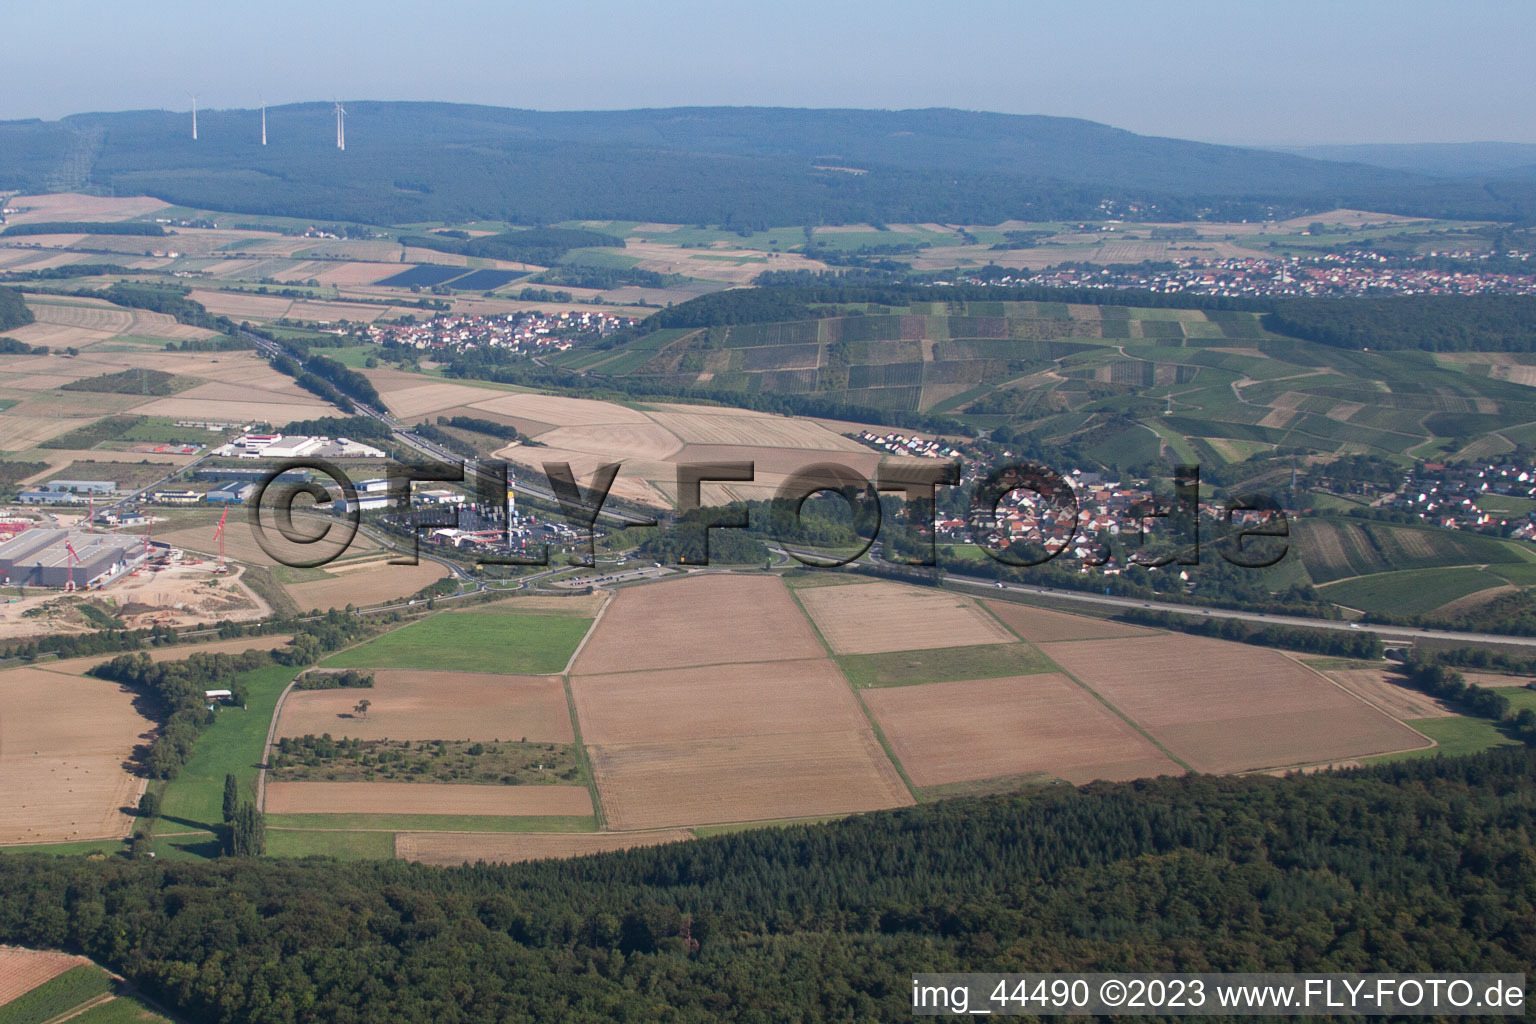 Waldlaubersheim in the state Rhineland-Palatinate, Germany